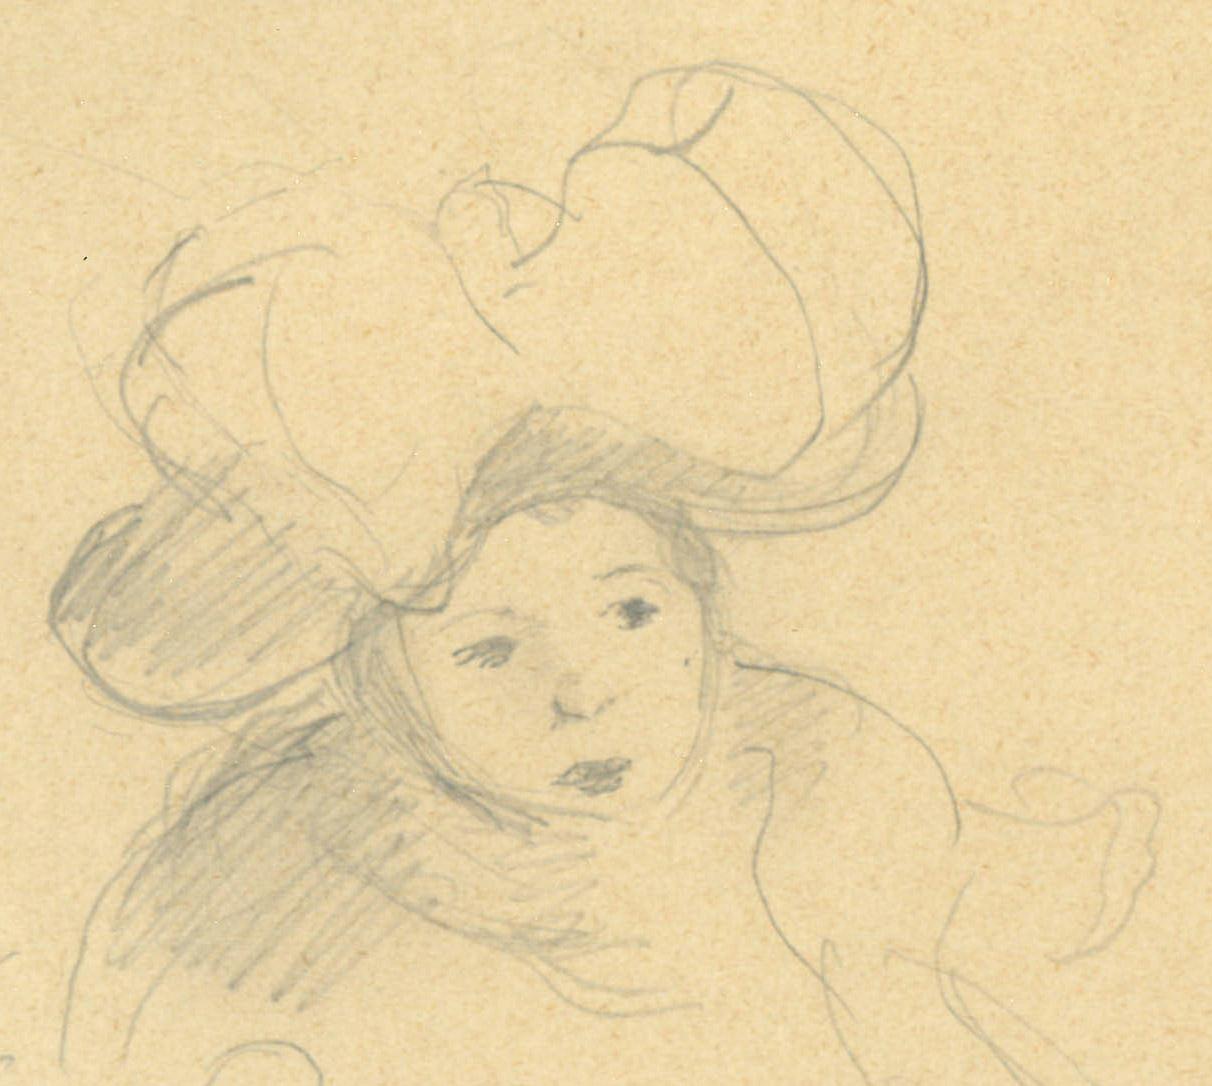 Modele au Chapeau or Child with a Large Hat - Art by Berthe Morisot